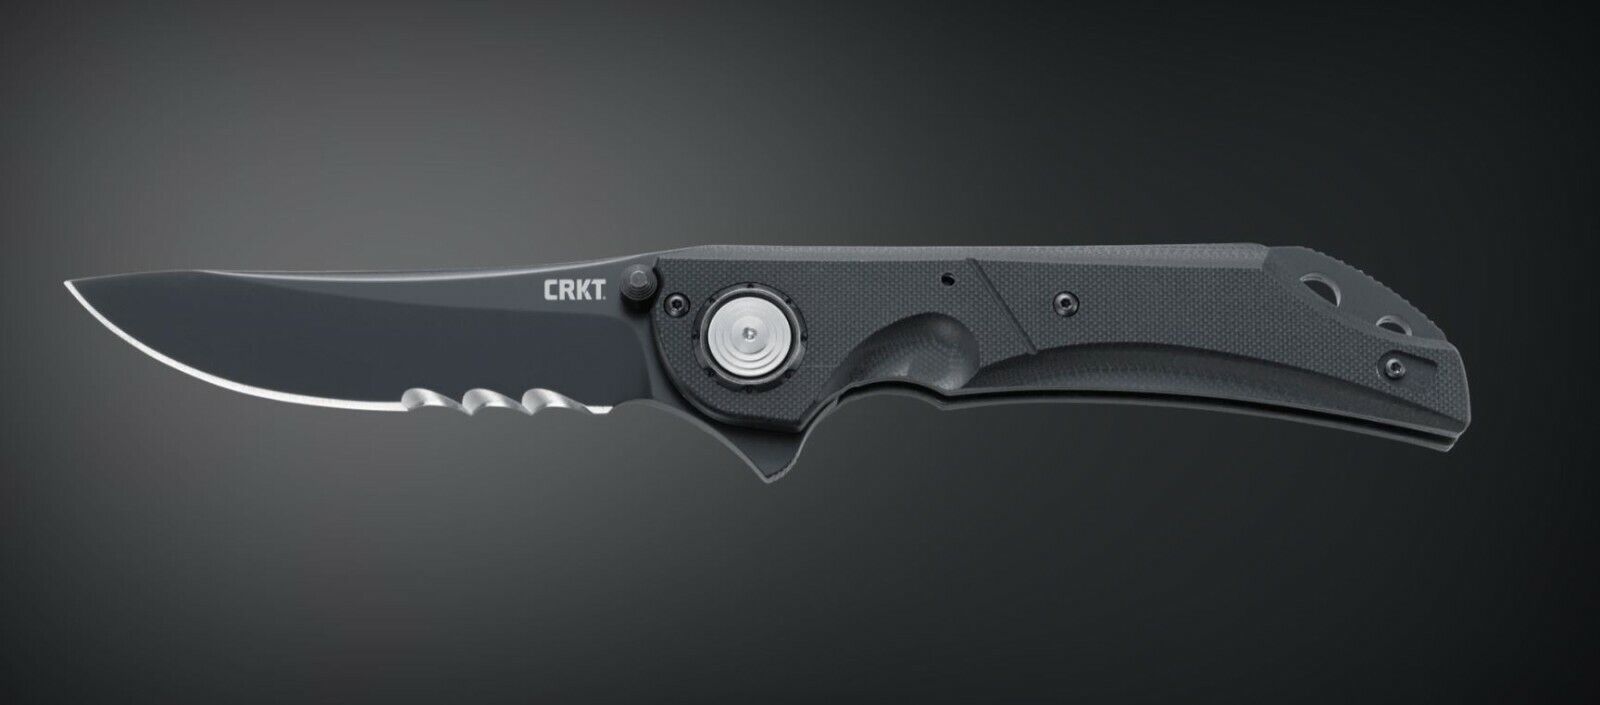 CRKT Seismic Folder Knife – Black with Veff Serrrations 5401K